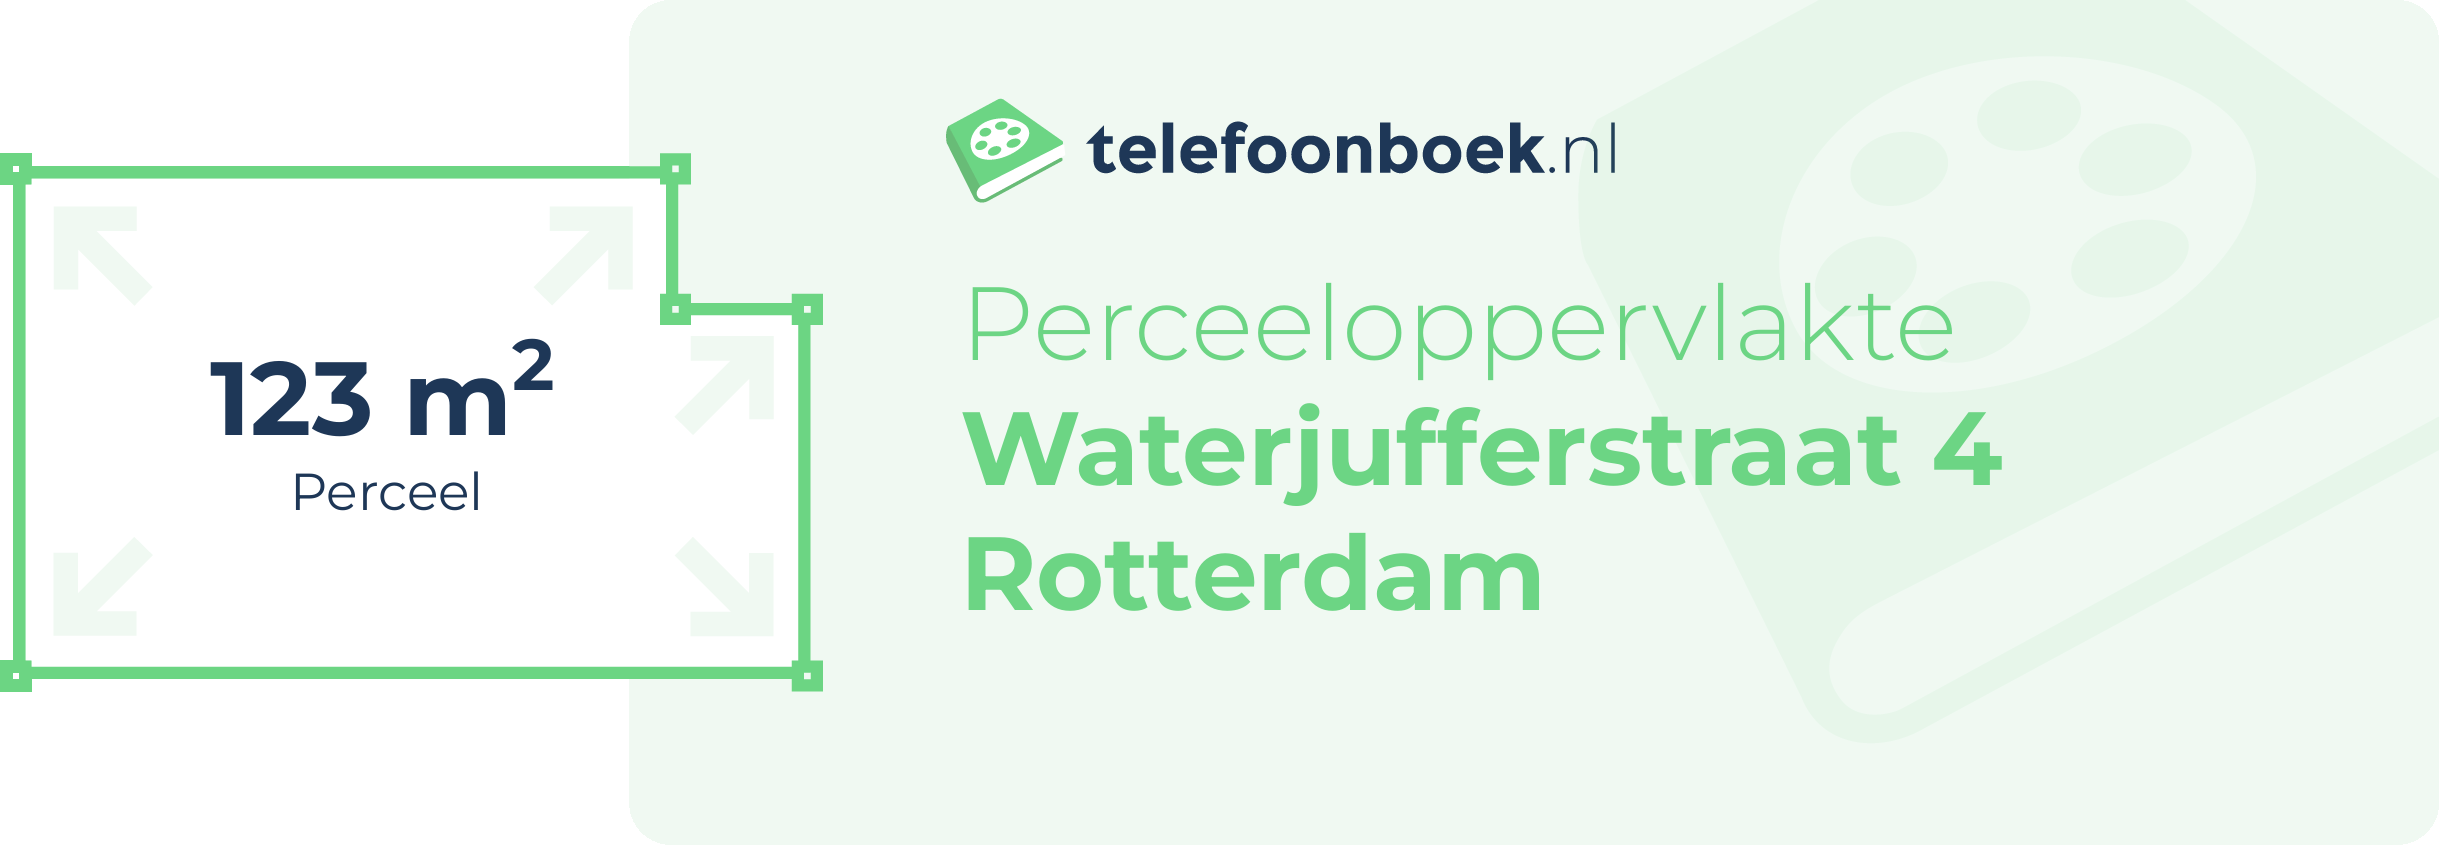 Perceeloppervlakte Waterjufferstraat 4 Rotterdam